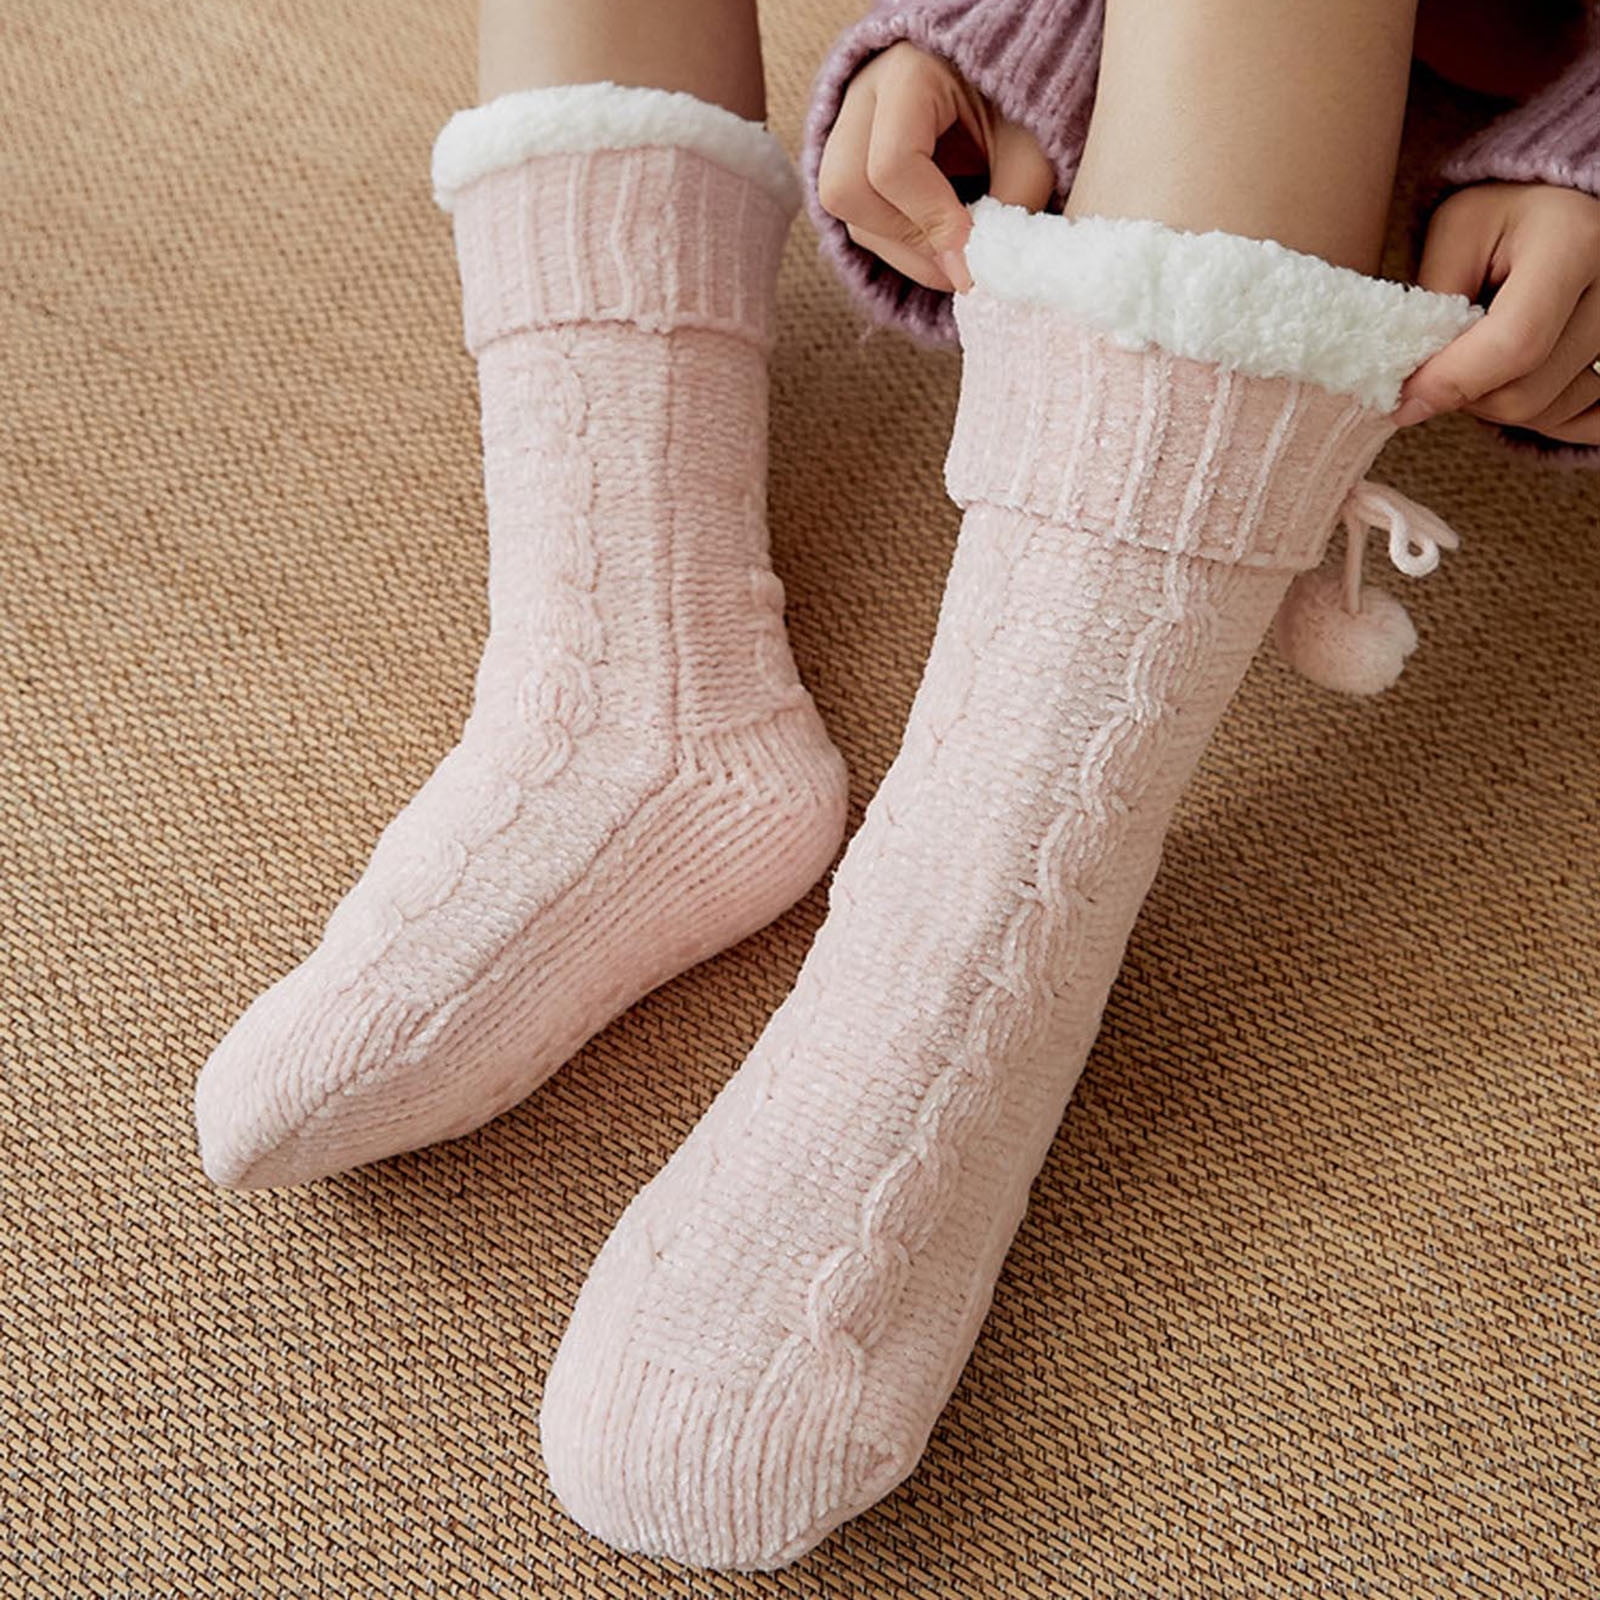 Lilgiuy Women Slipper Fuzzy Socks Winter Thick Warm Cozy Soft Fleece Non  Slip Indoor Socks Christmas Gifts for Her Blue